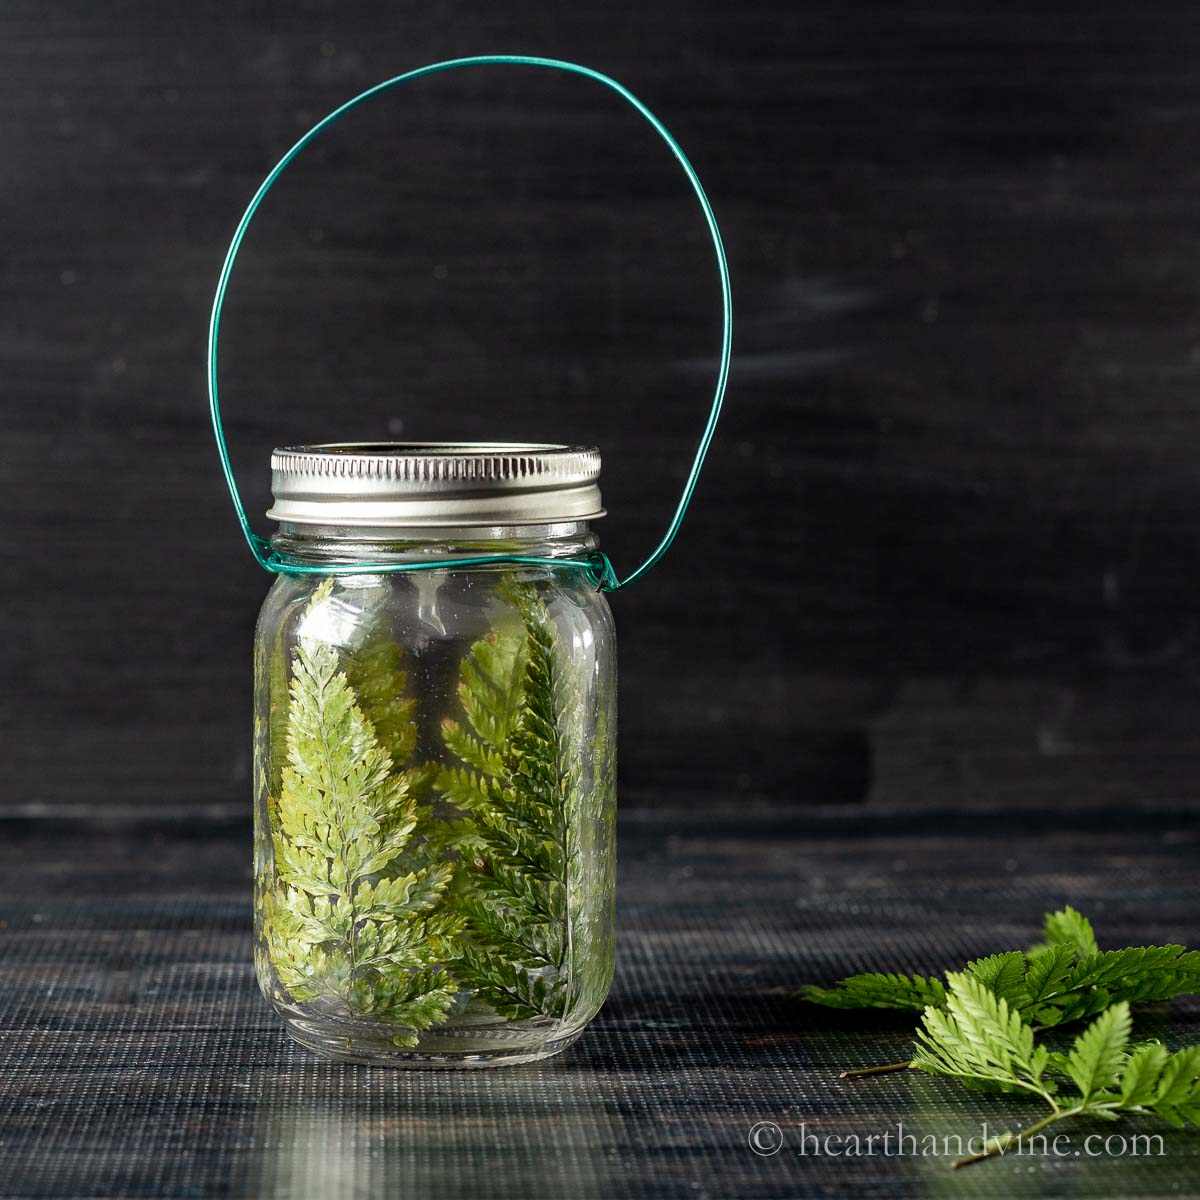 Mason jar lantern with wire handle and pressed ferns inside.